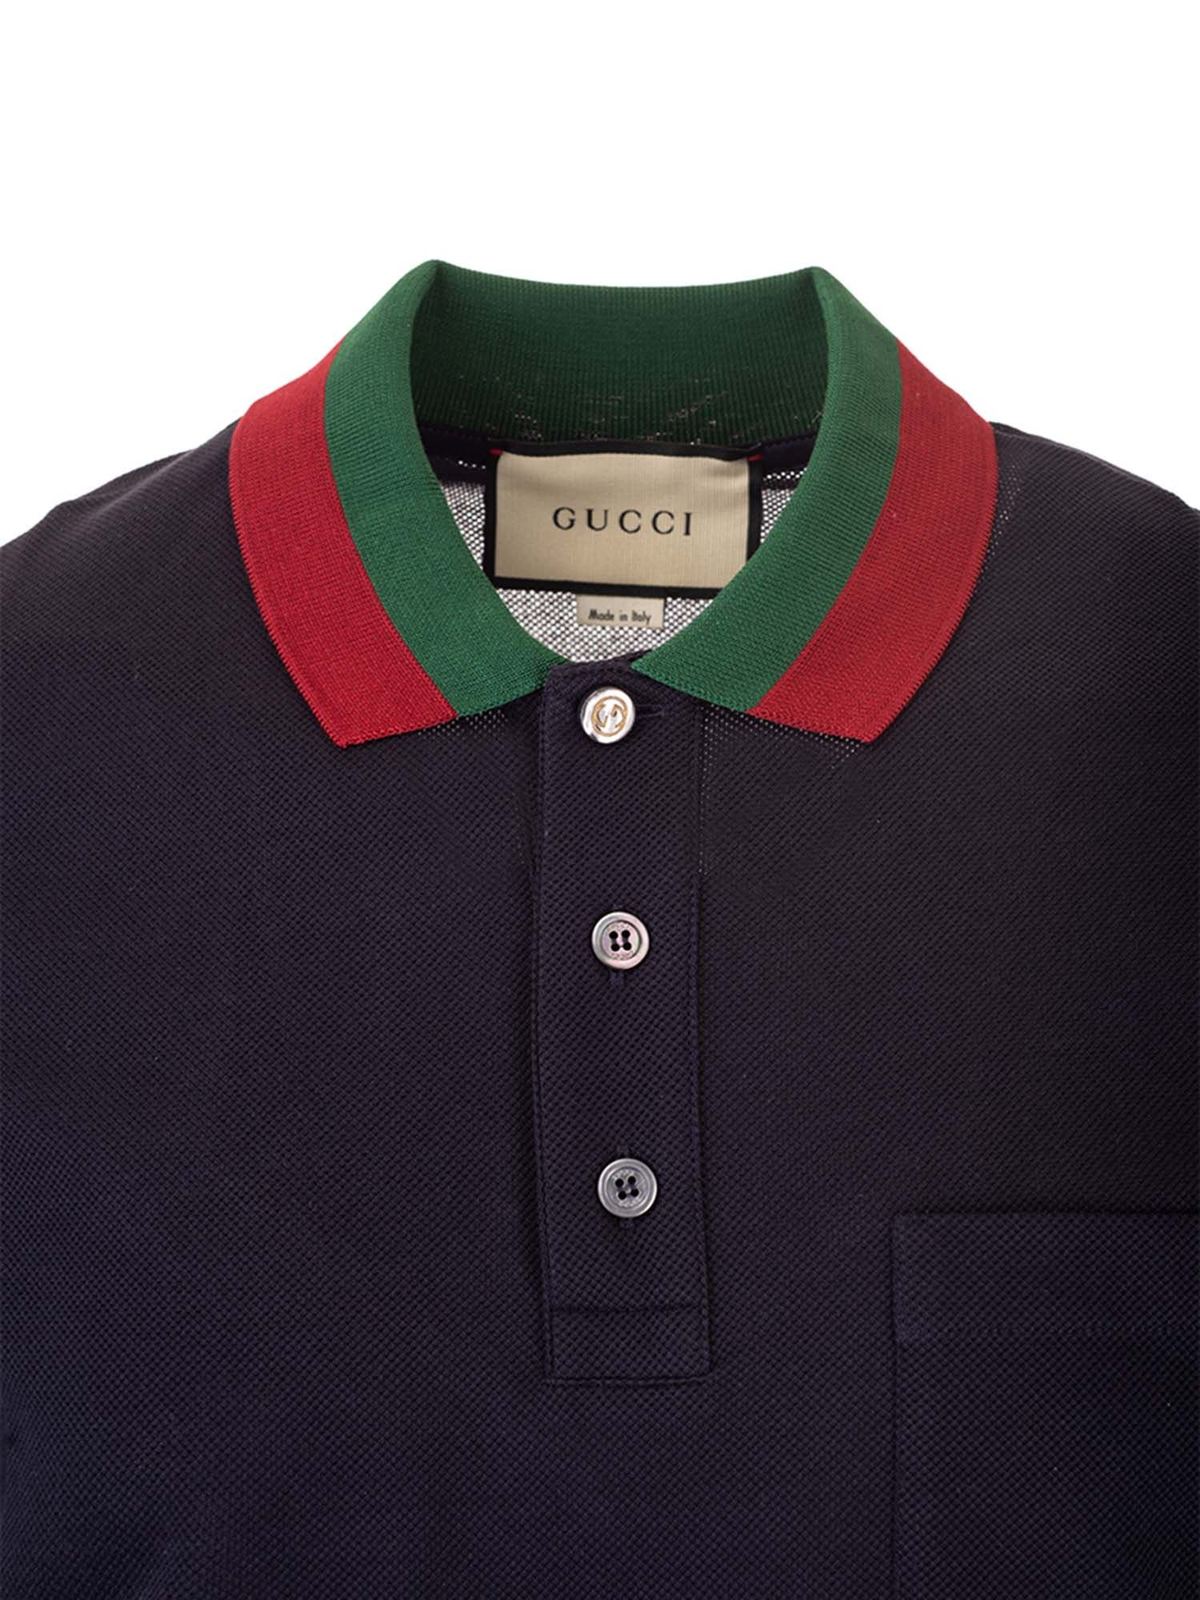 Tigge Regenerativ korroderer Polo shirts Gucci - Web collar polo shirt in blue - 408321X73314060